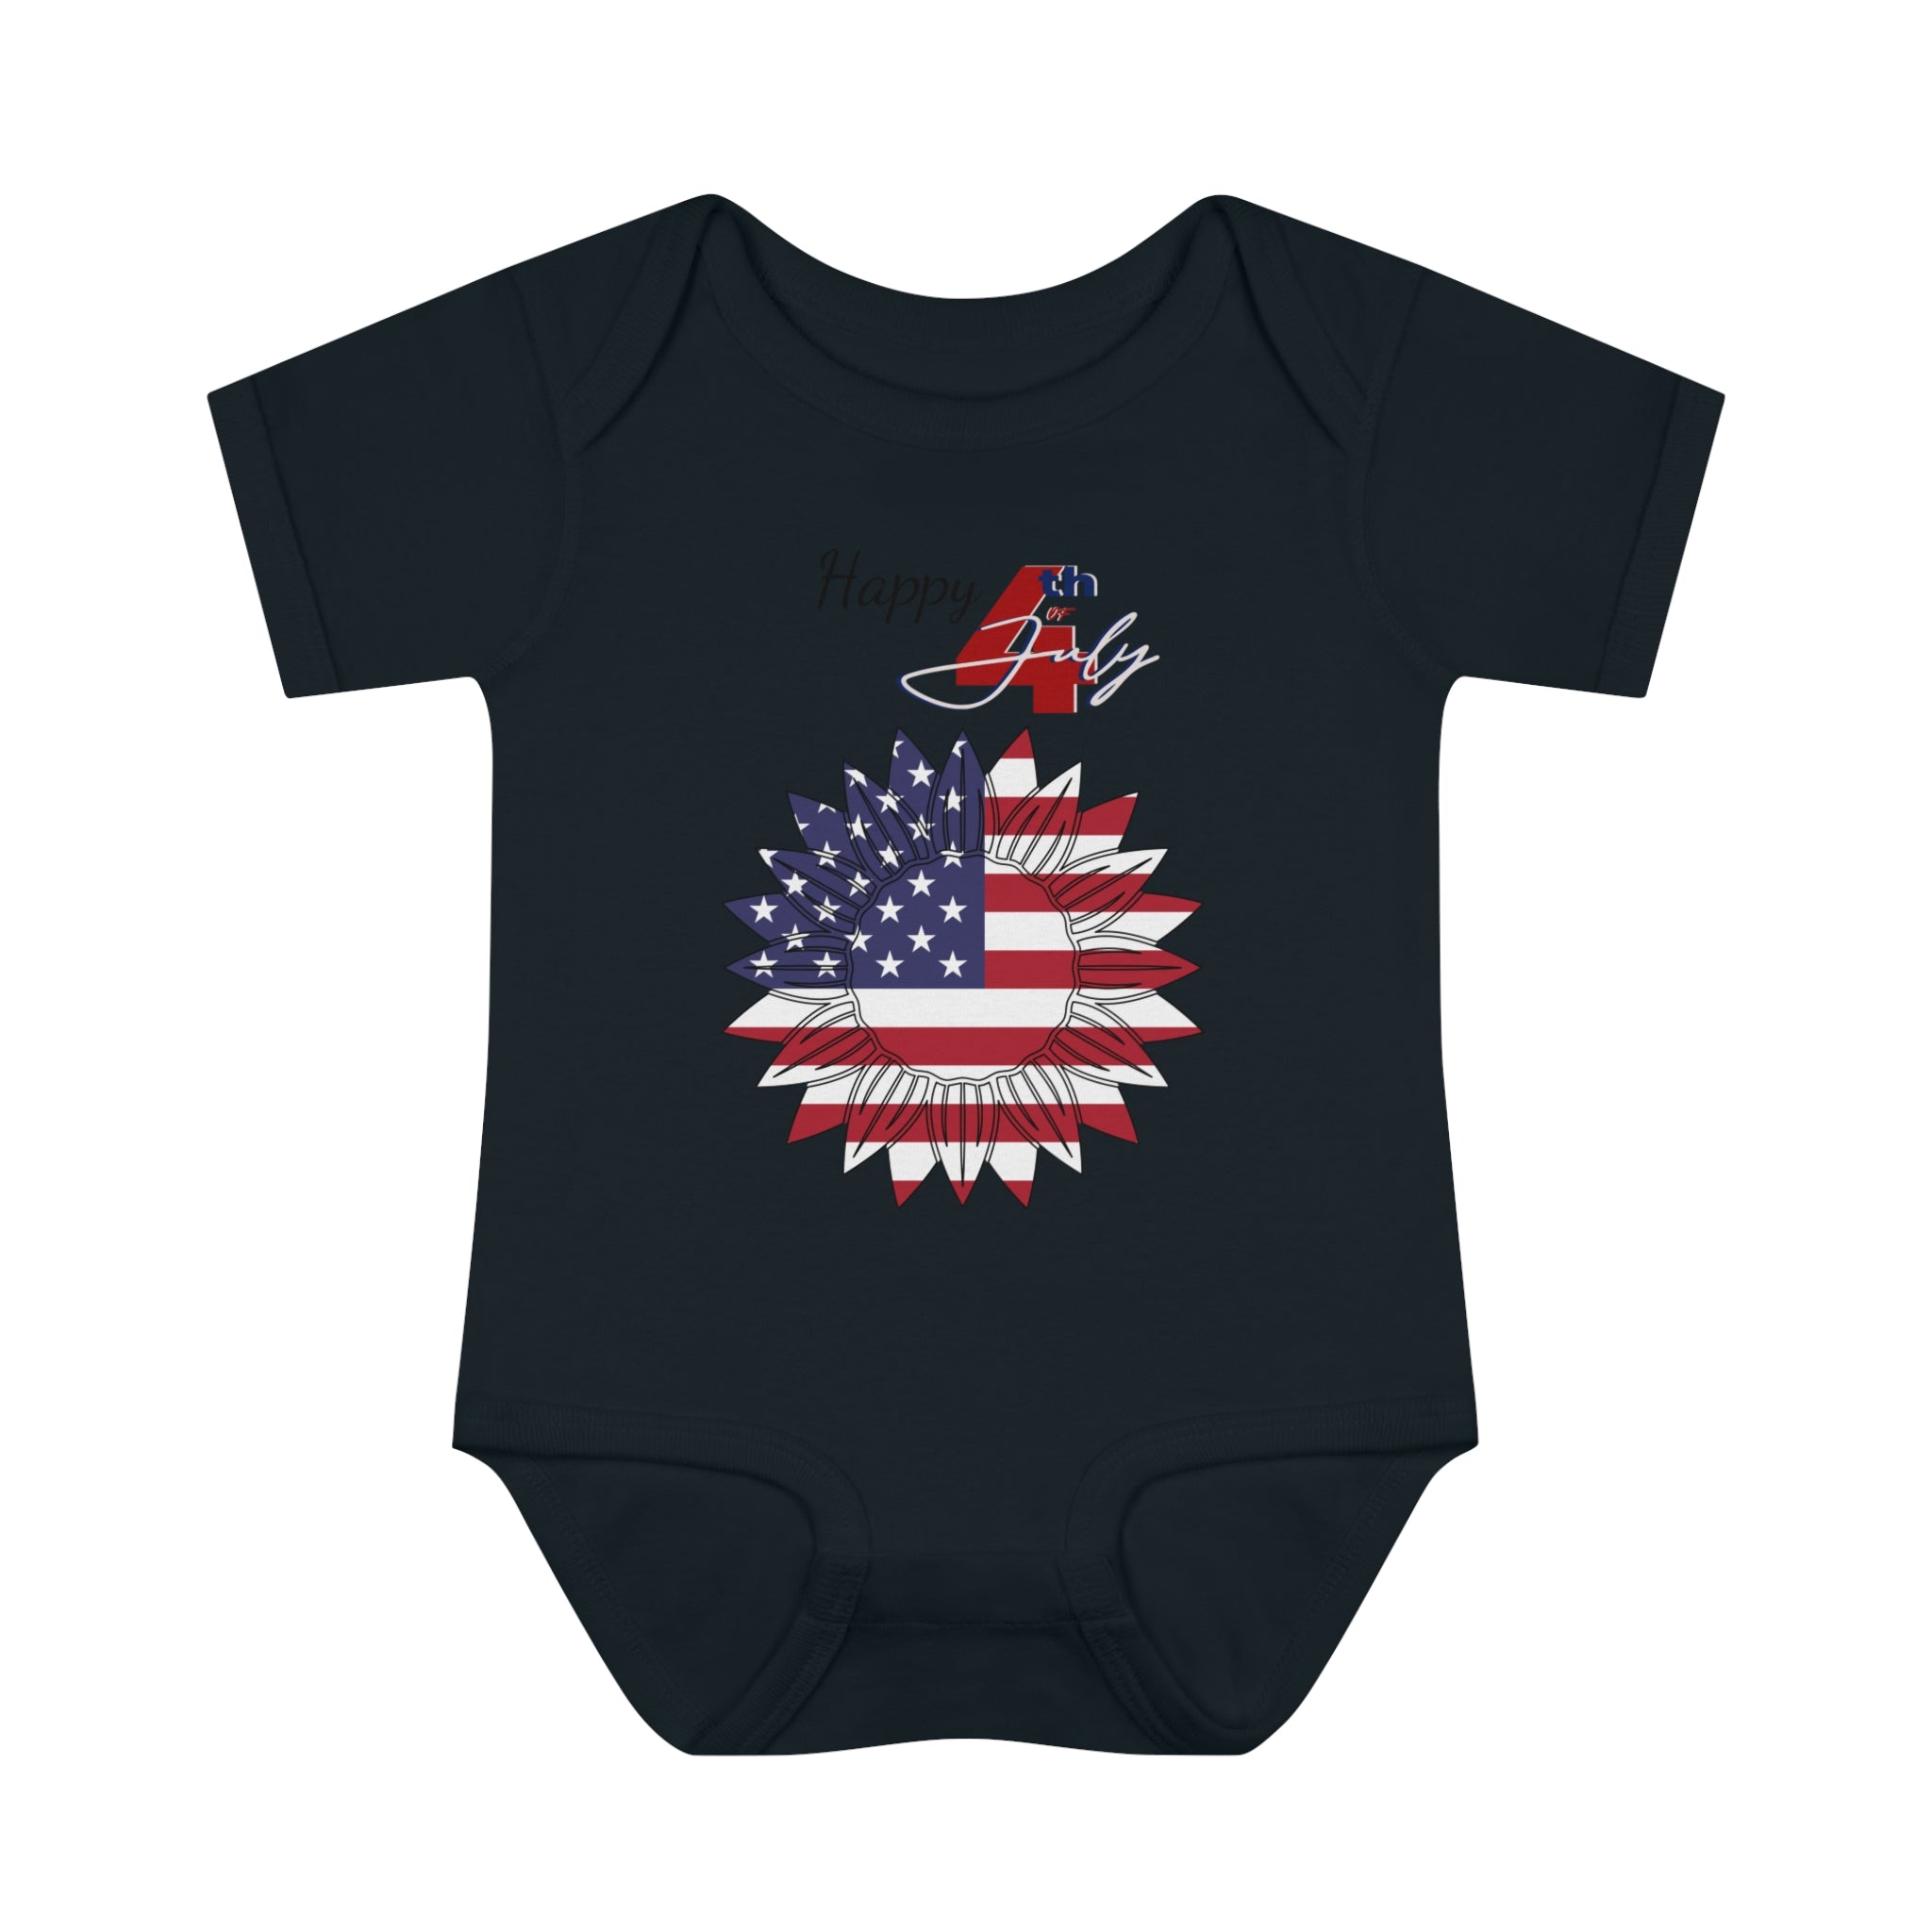 Happy 4th of July American Flag Sunflower design Baby Bodysuit